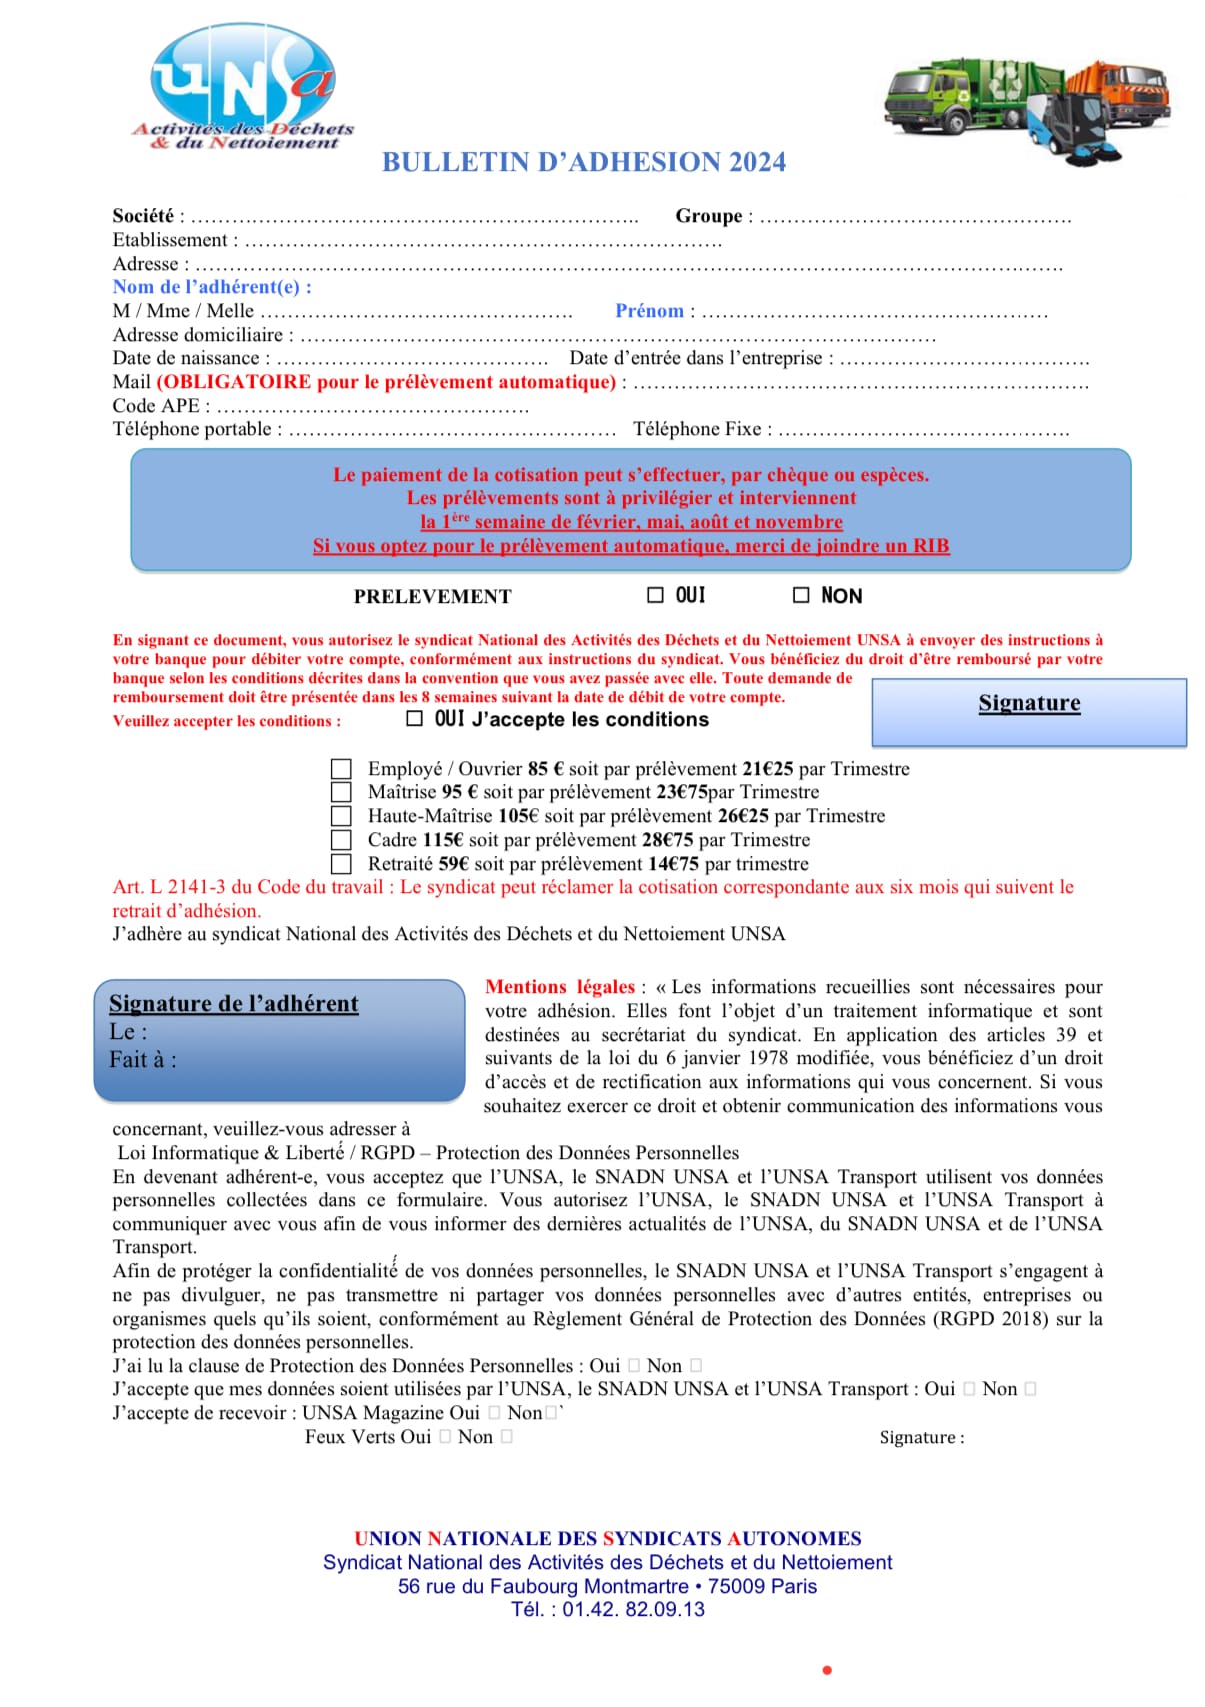 Bulletin d’adhésion SNADN UNSA 2024